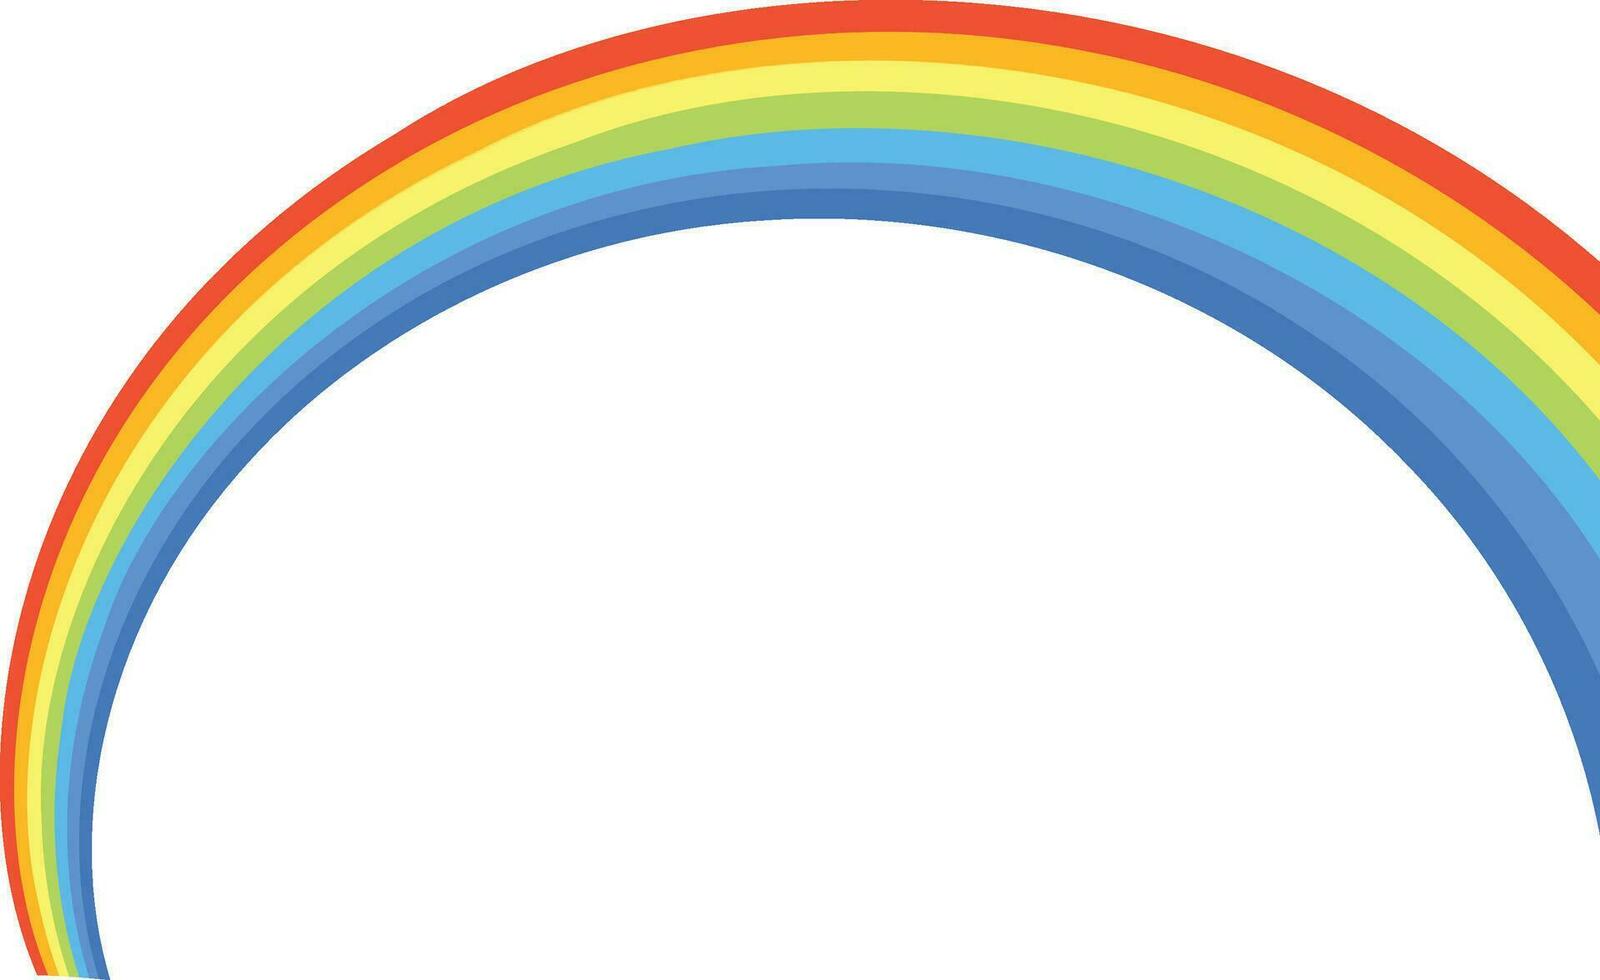 Flat illustration of rainbow. vector